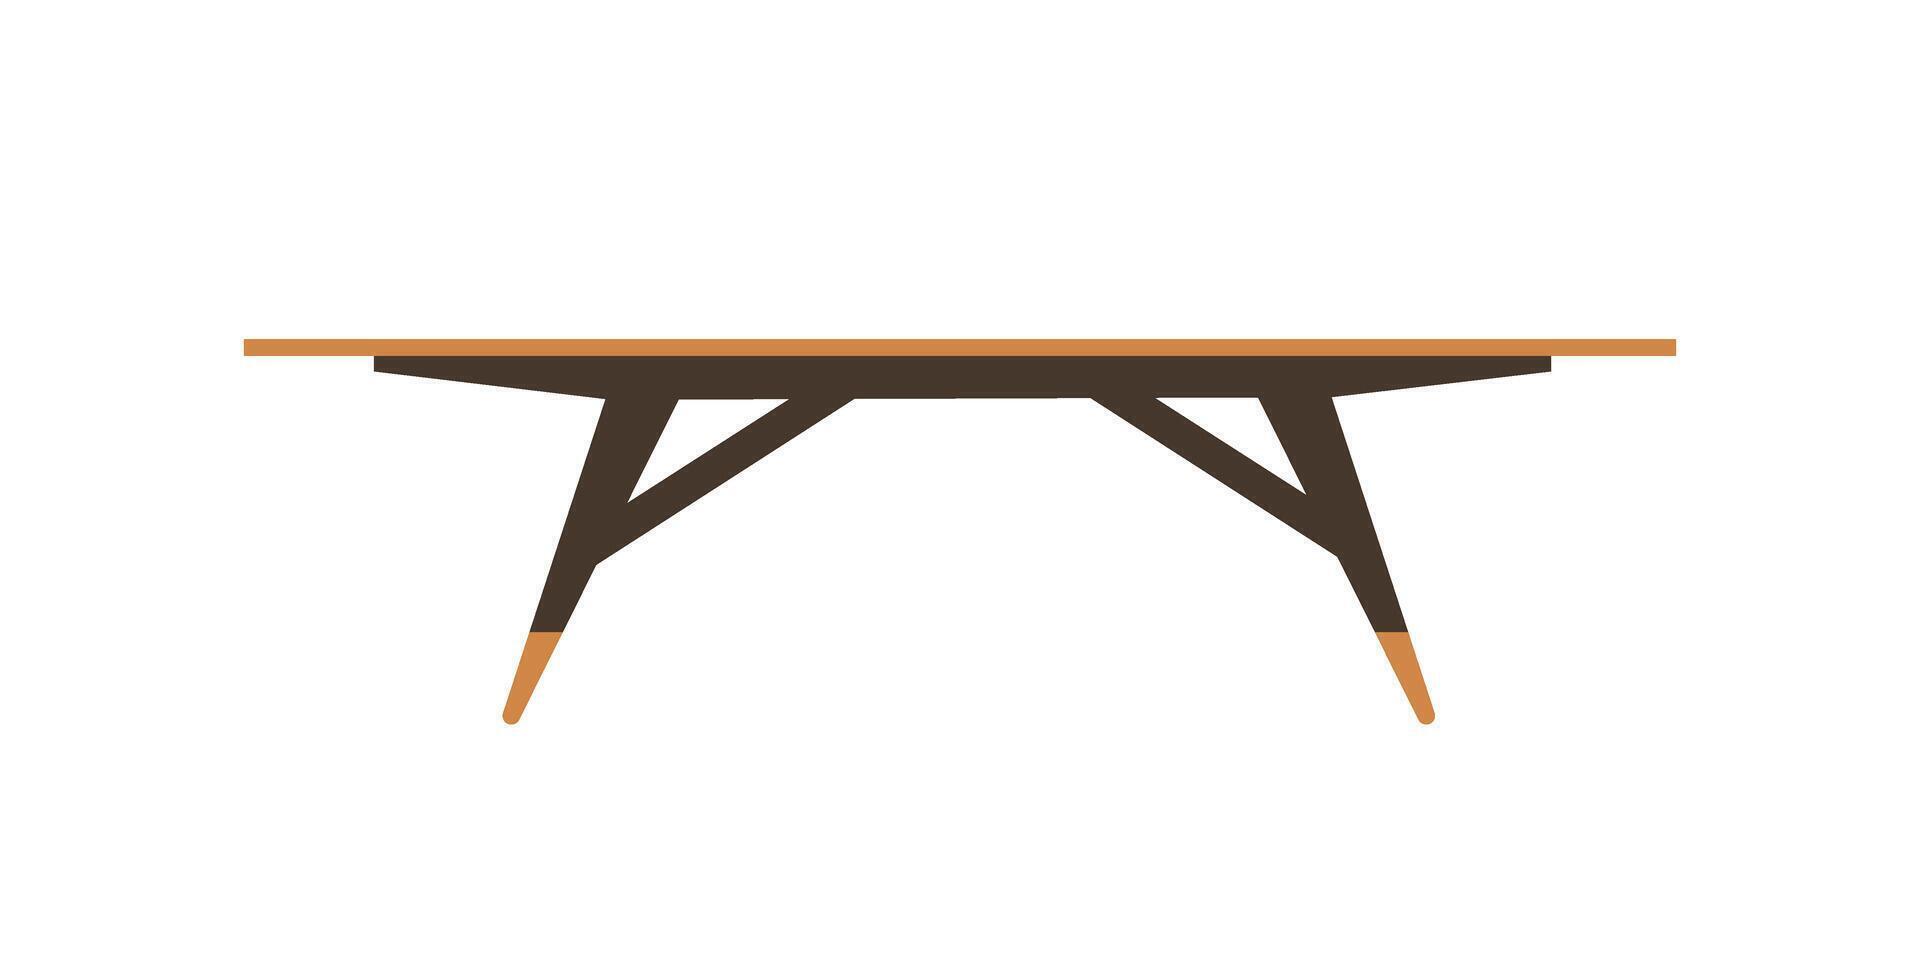 Table is Scandinavian style. Wooden table. illustration flat style vector